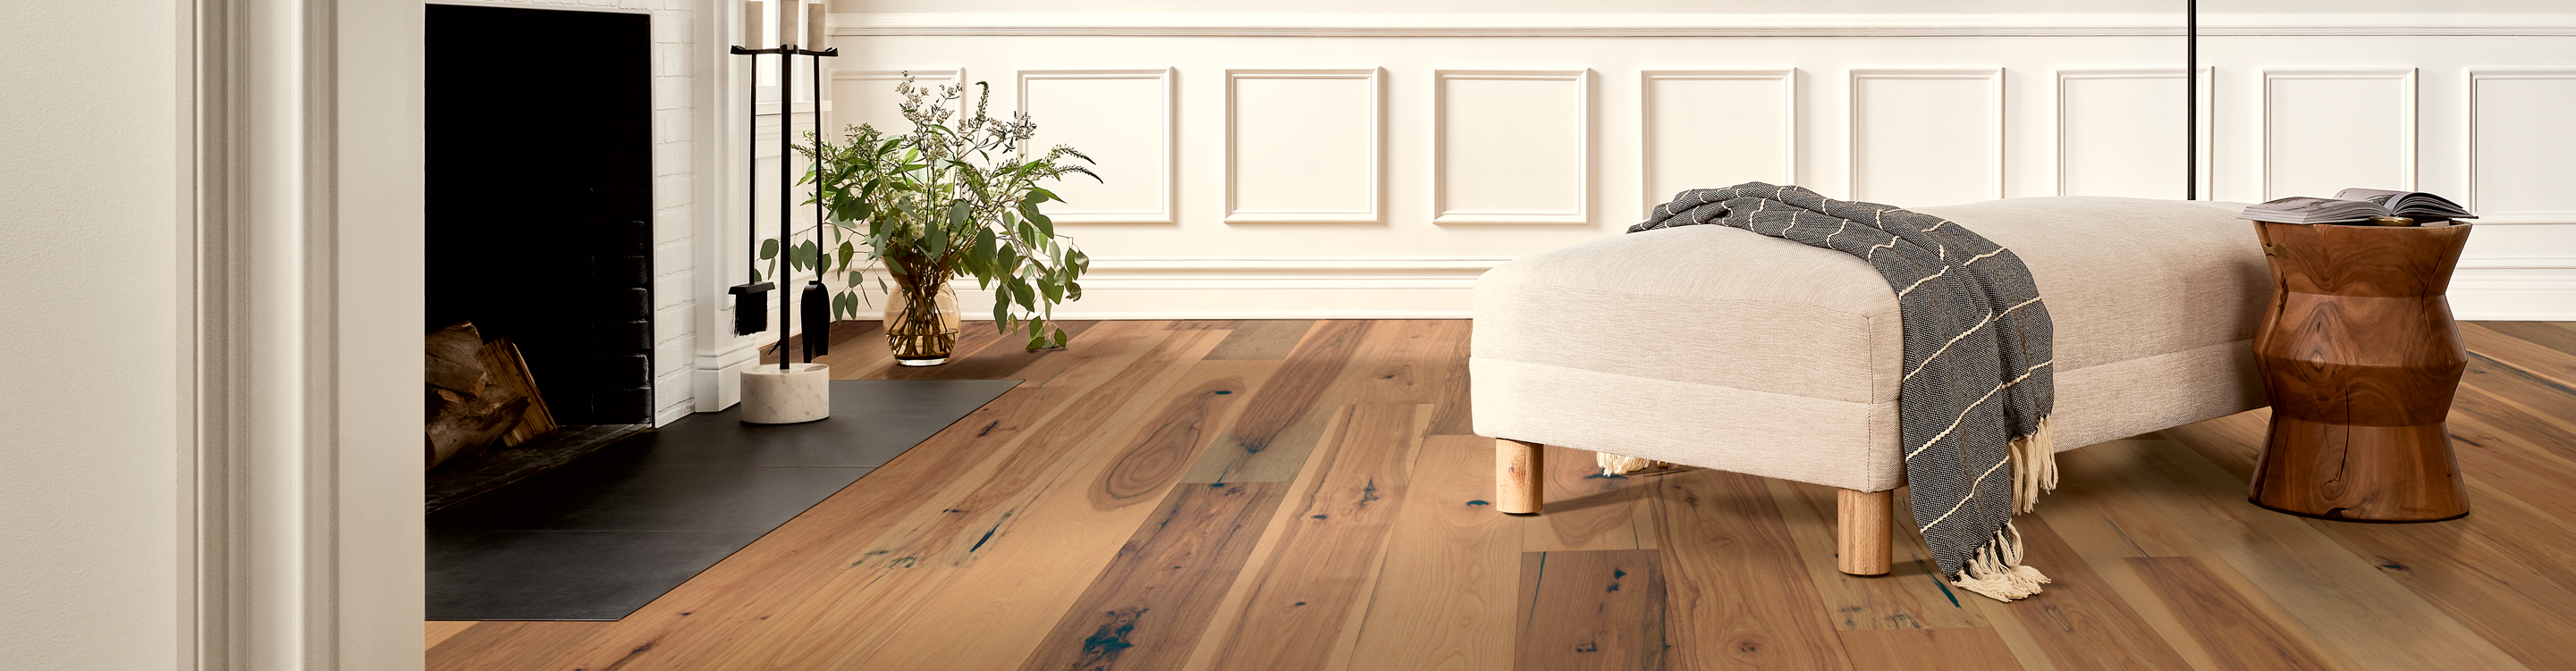 Wide plank oak hardwood floor with white ottoman, white walls 